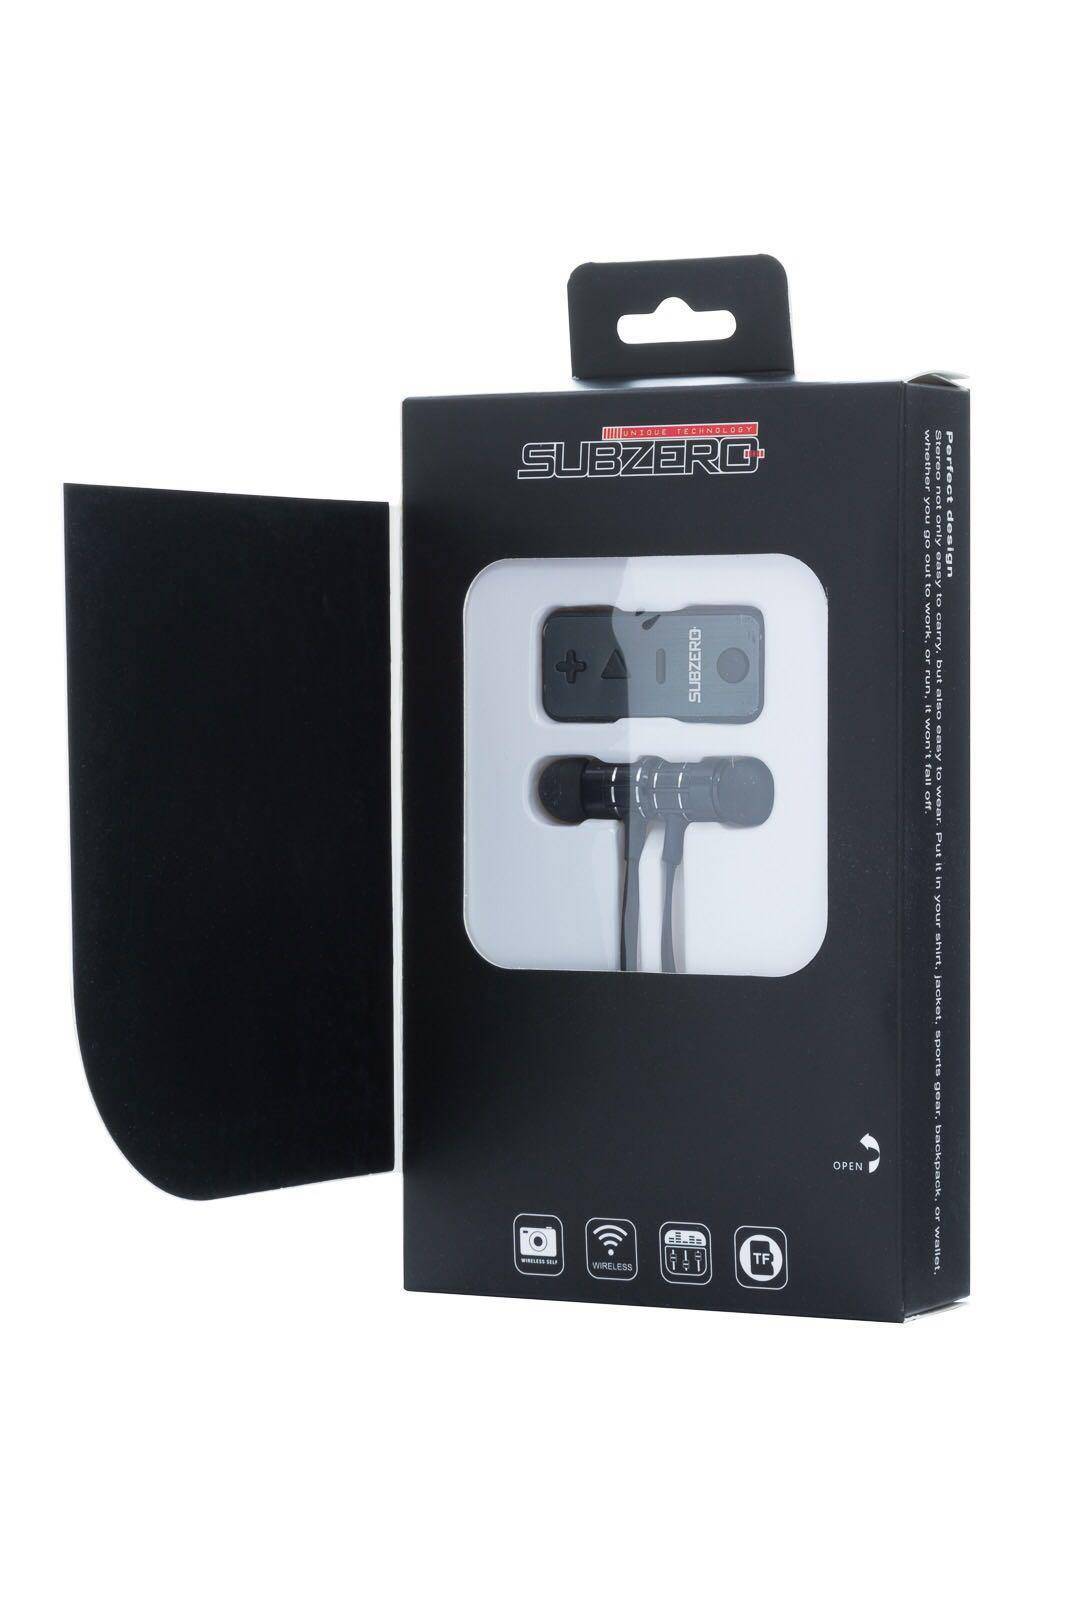 BLACK BLUETOOTH HEADPHONES SBZ-020 WITH SD CARD SLOT